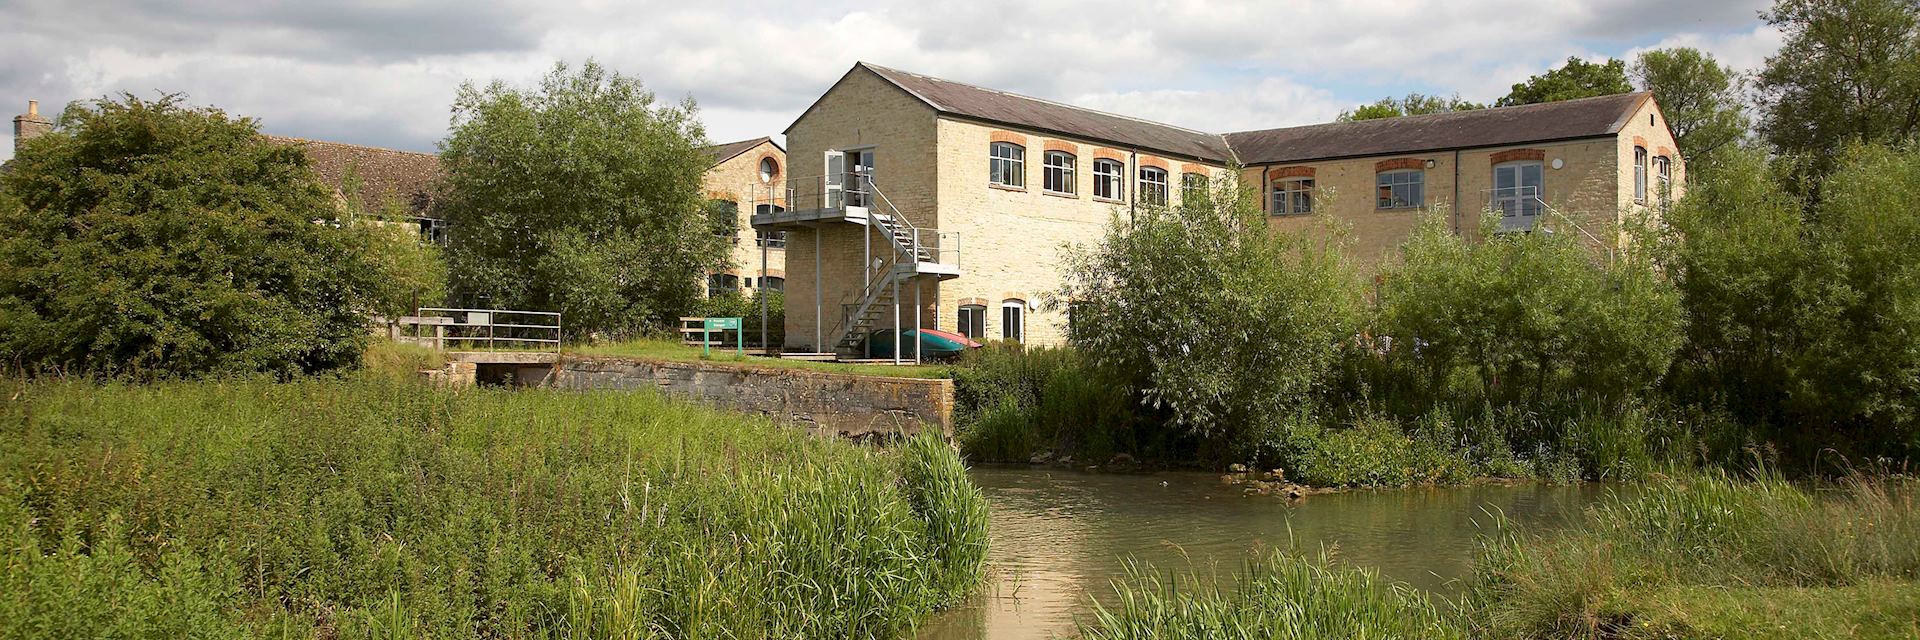 New Mill in Witney